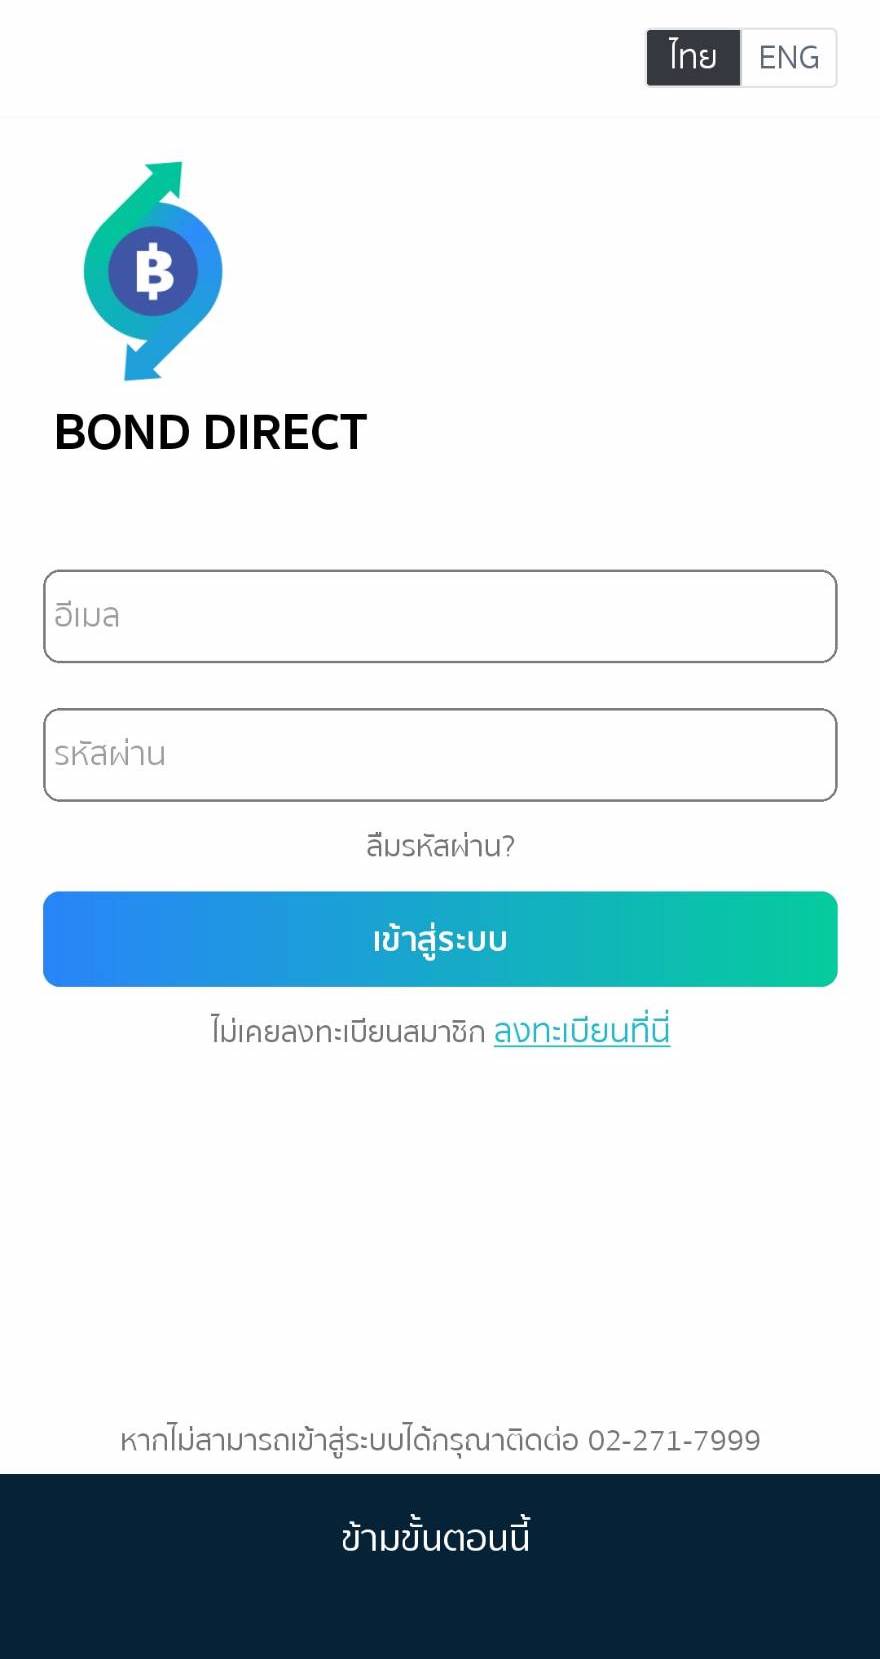 Bond Direct